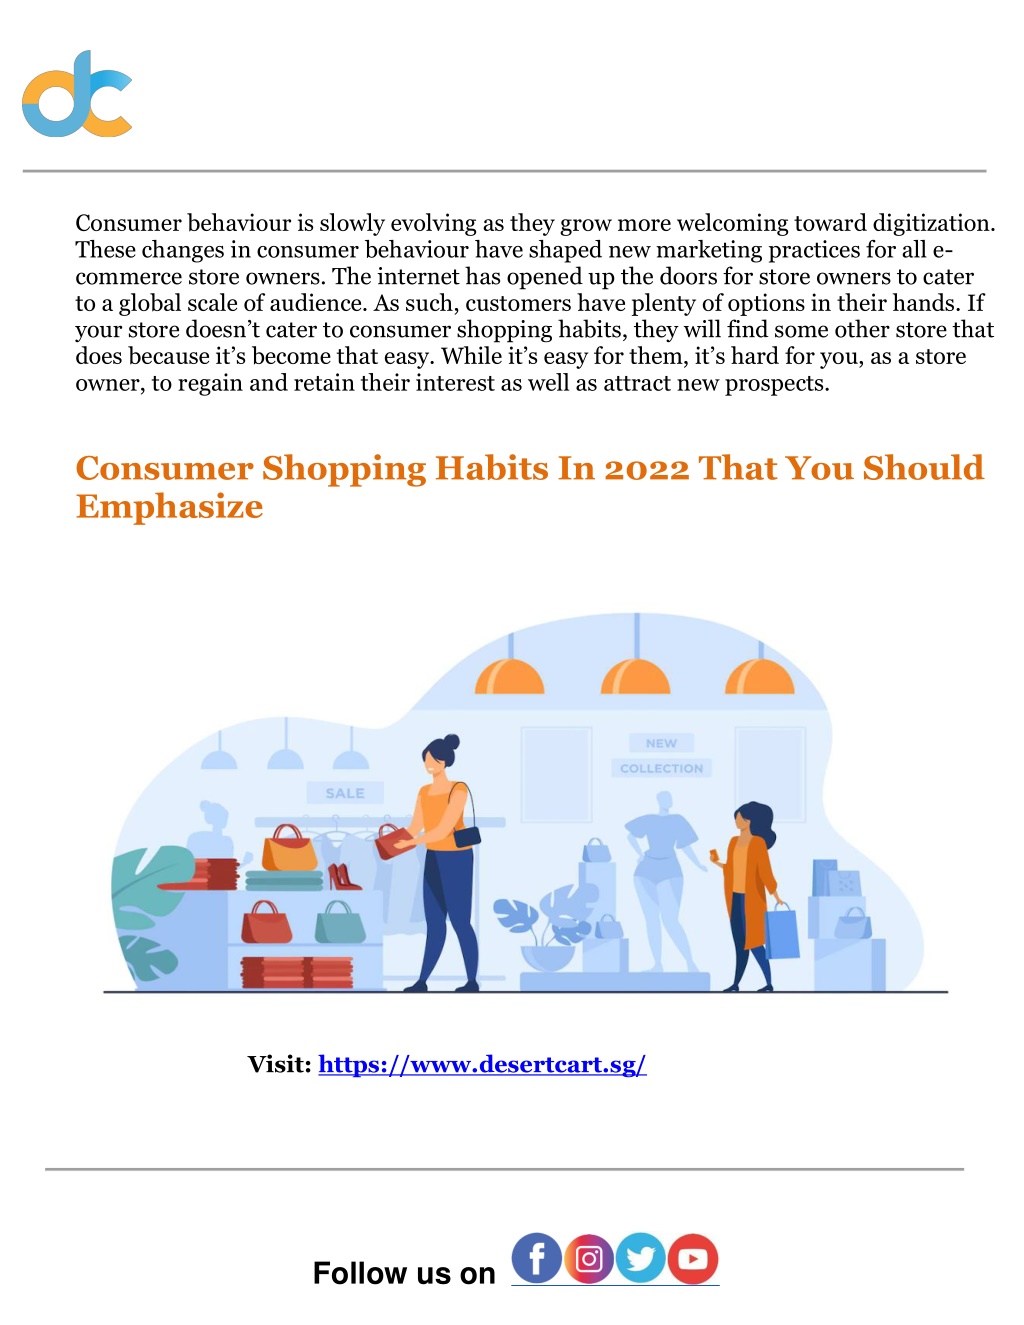 consumer habits study